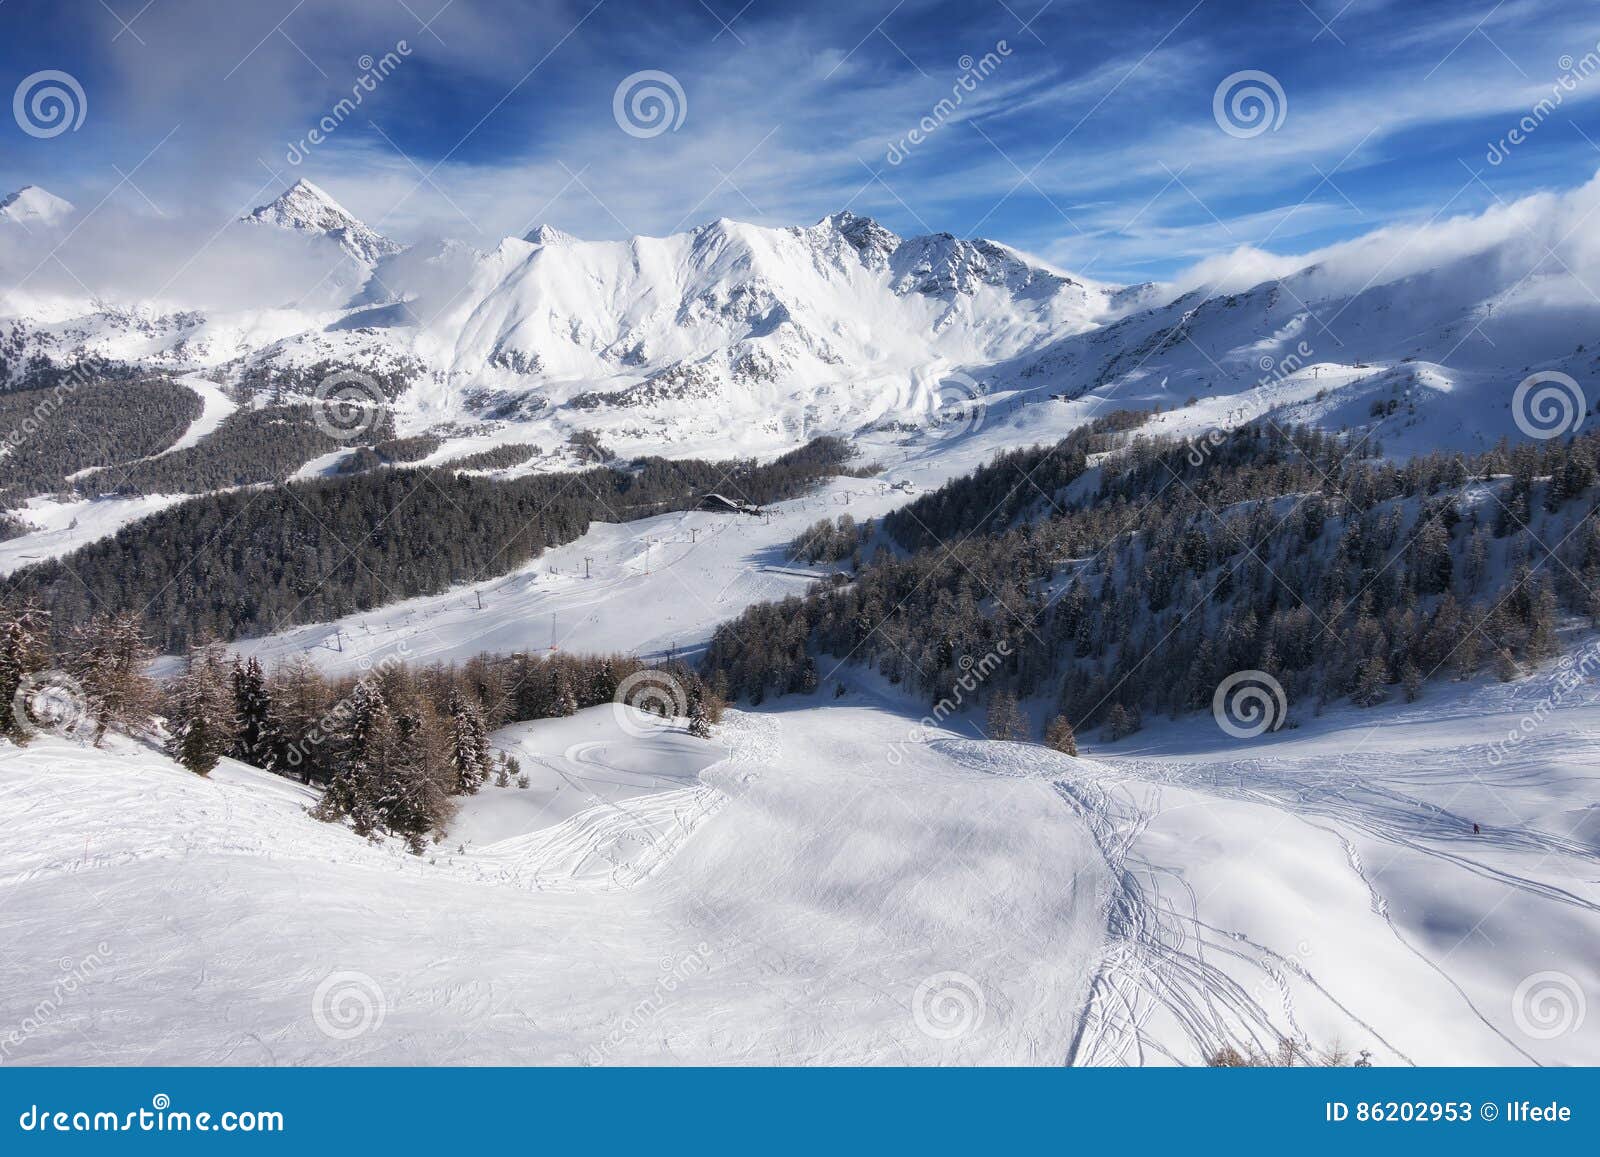 aerial mountain view of pila ski resort in winter, aosta, italy